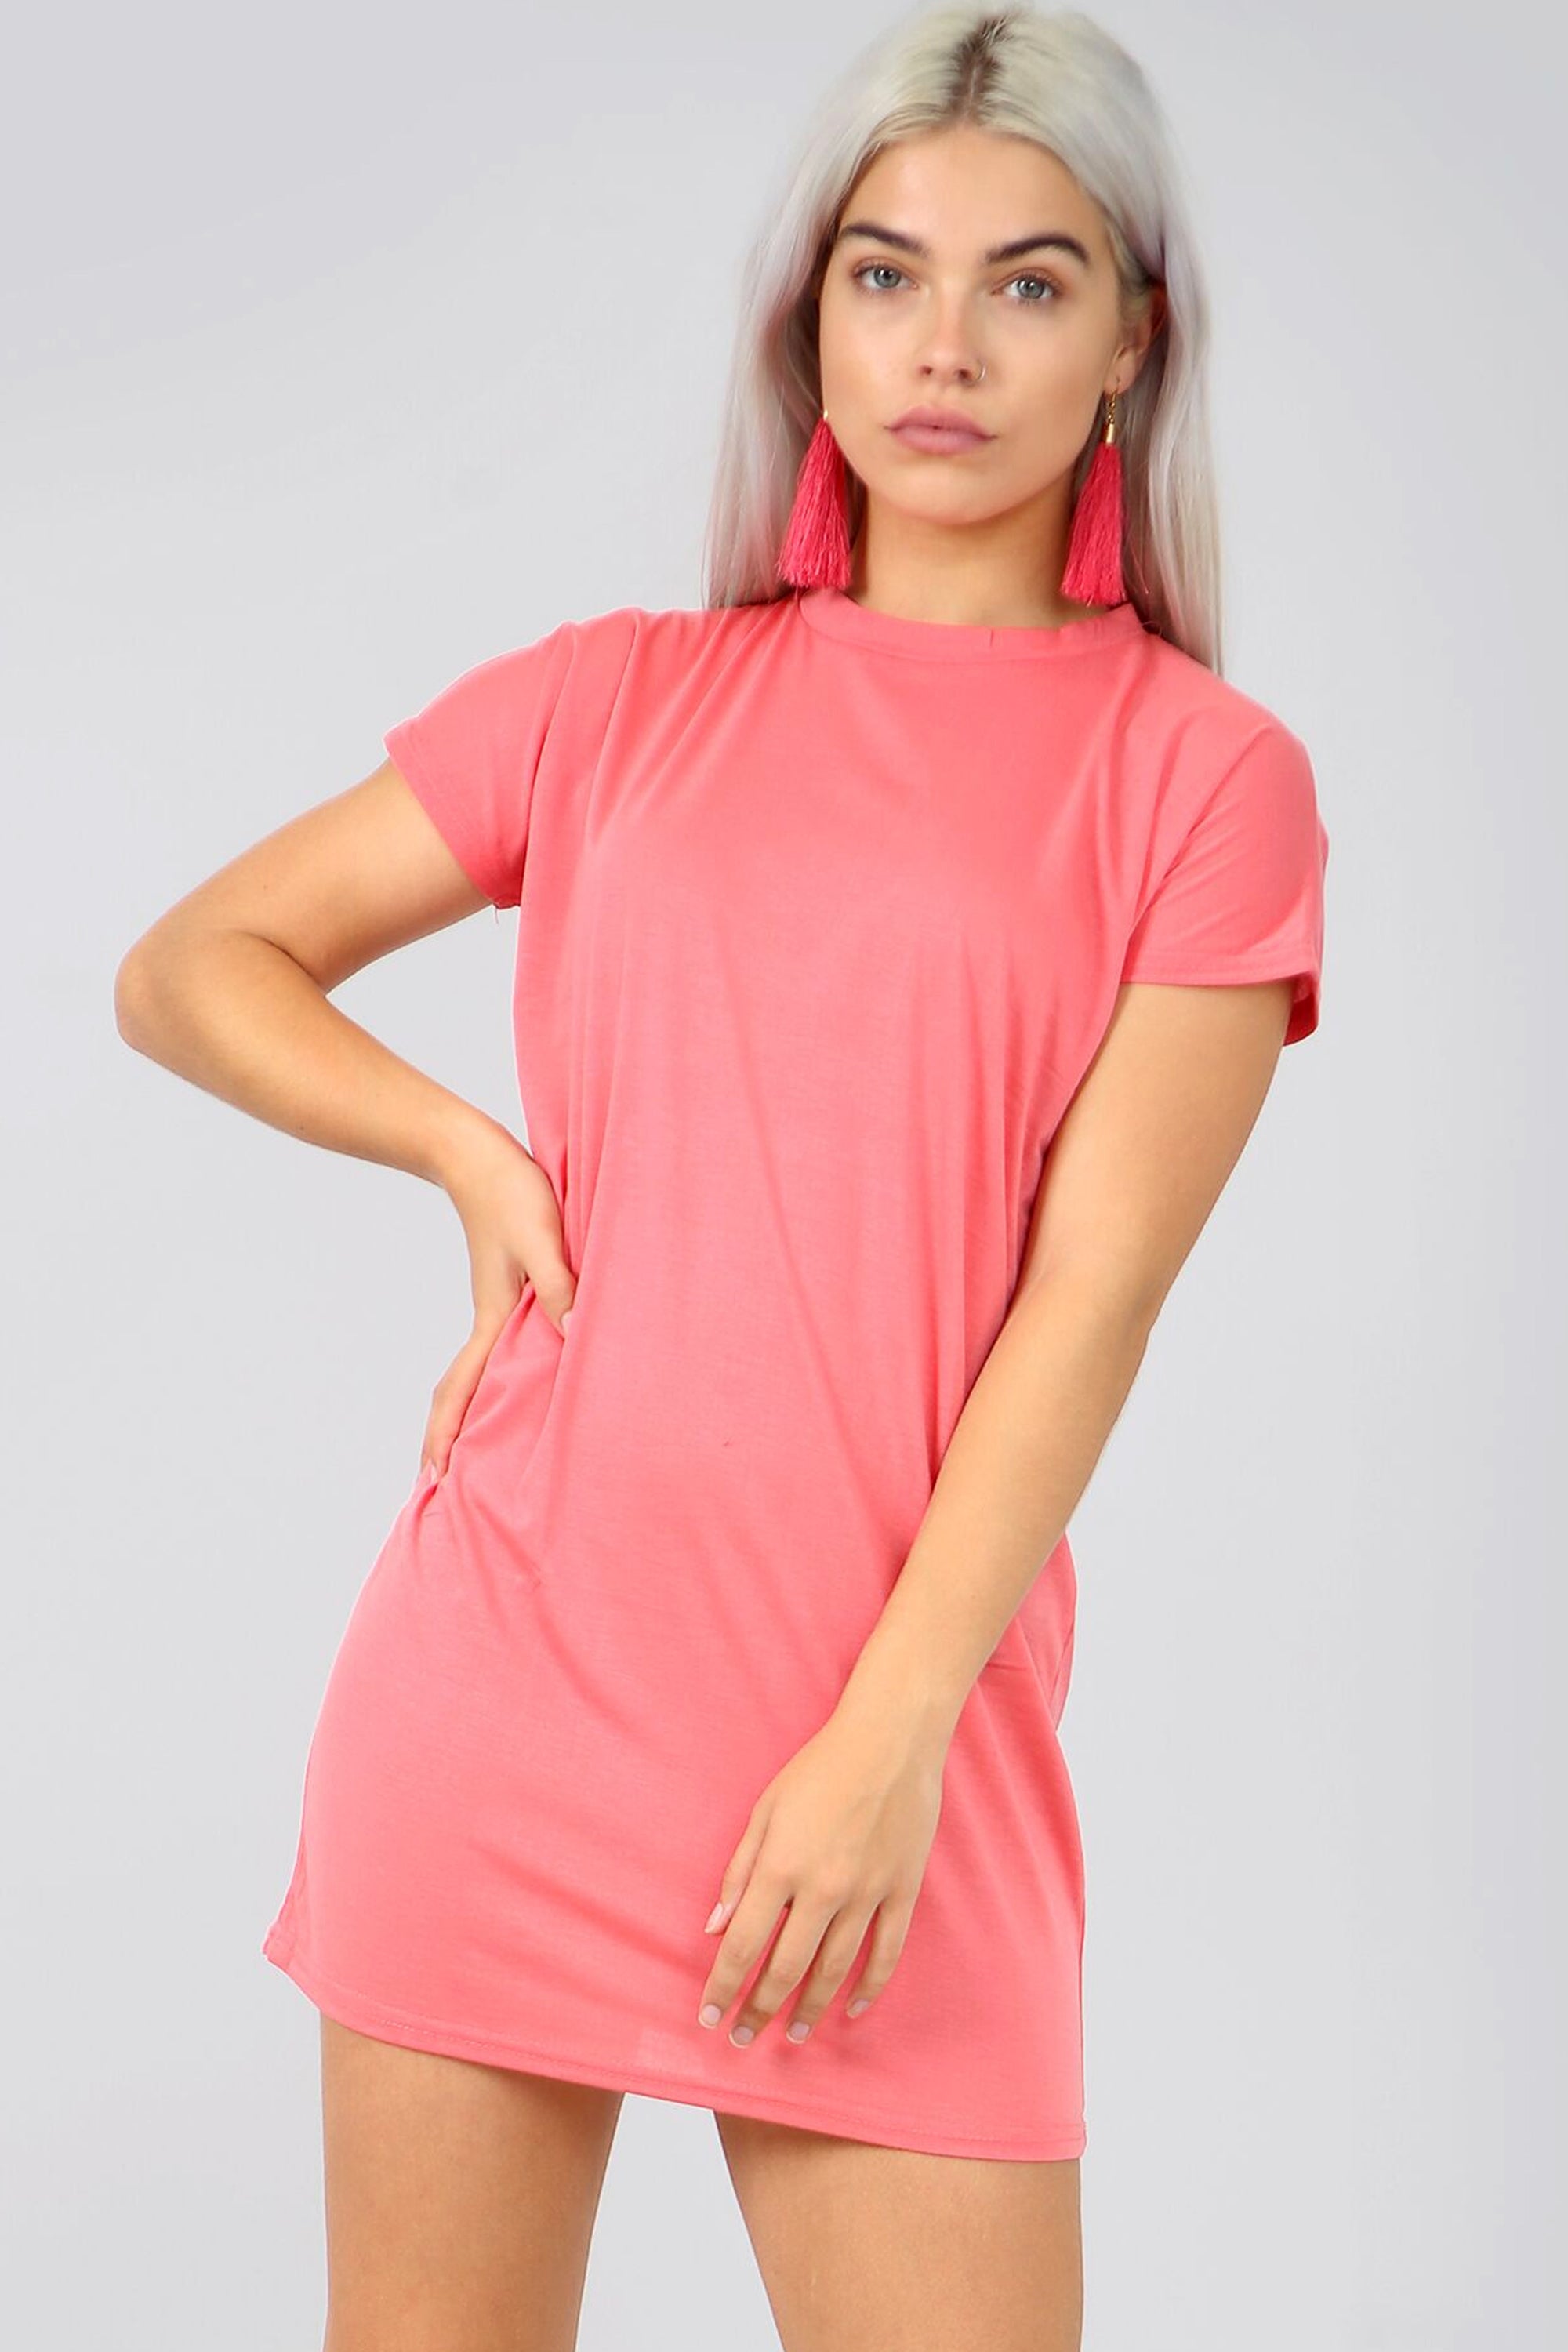 Basic Short Sleeve Tshirt Dress in Coral Pink - bejealous-com